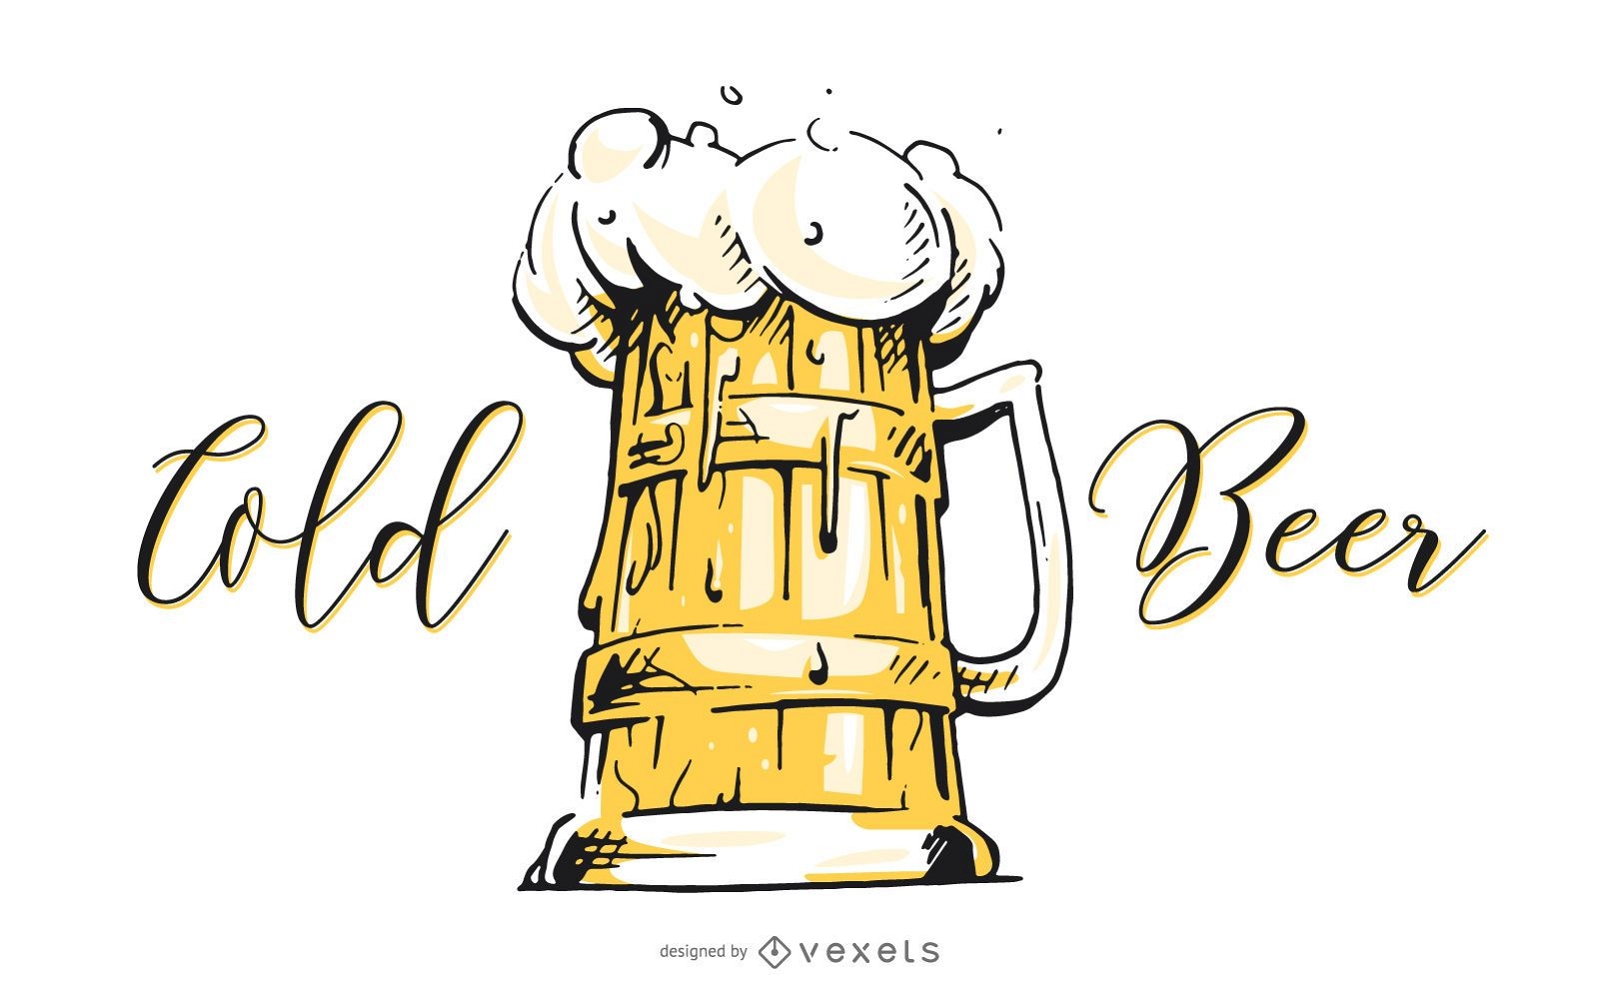 Cold beer mug illustrator